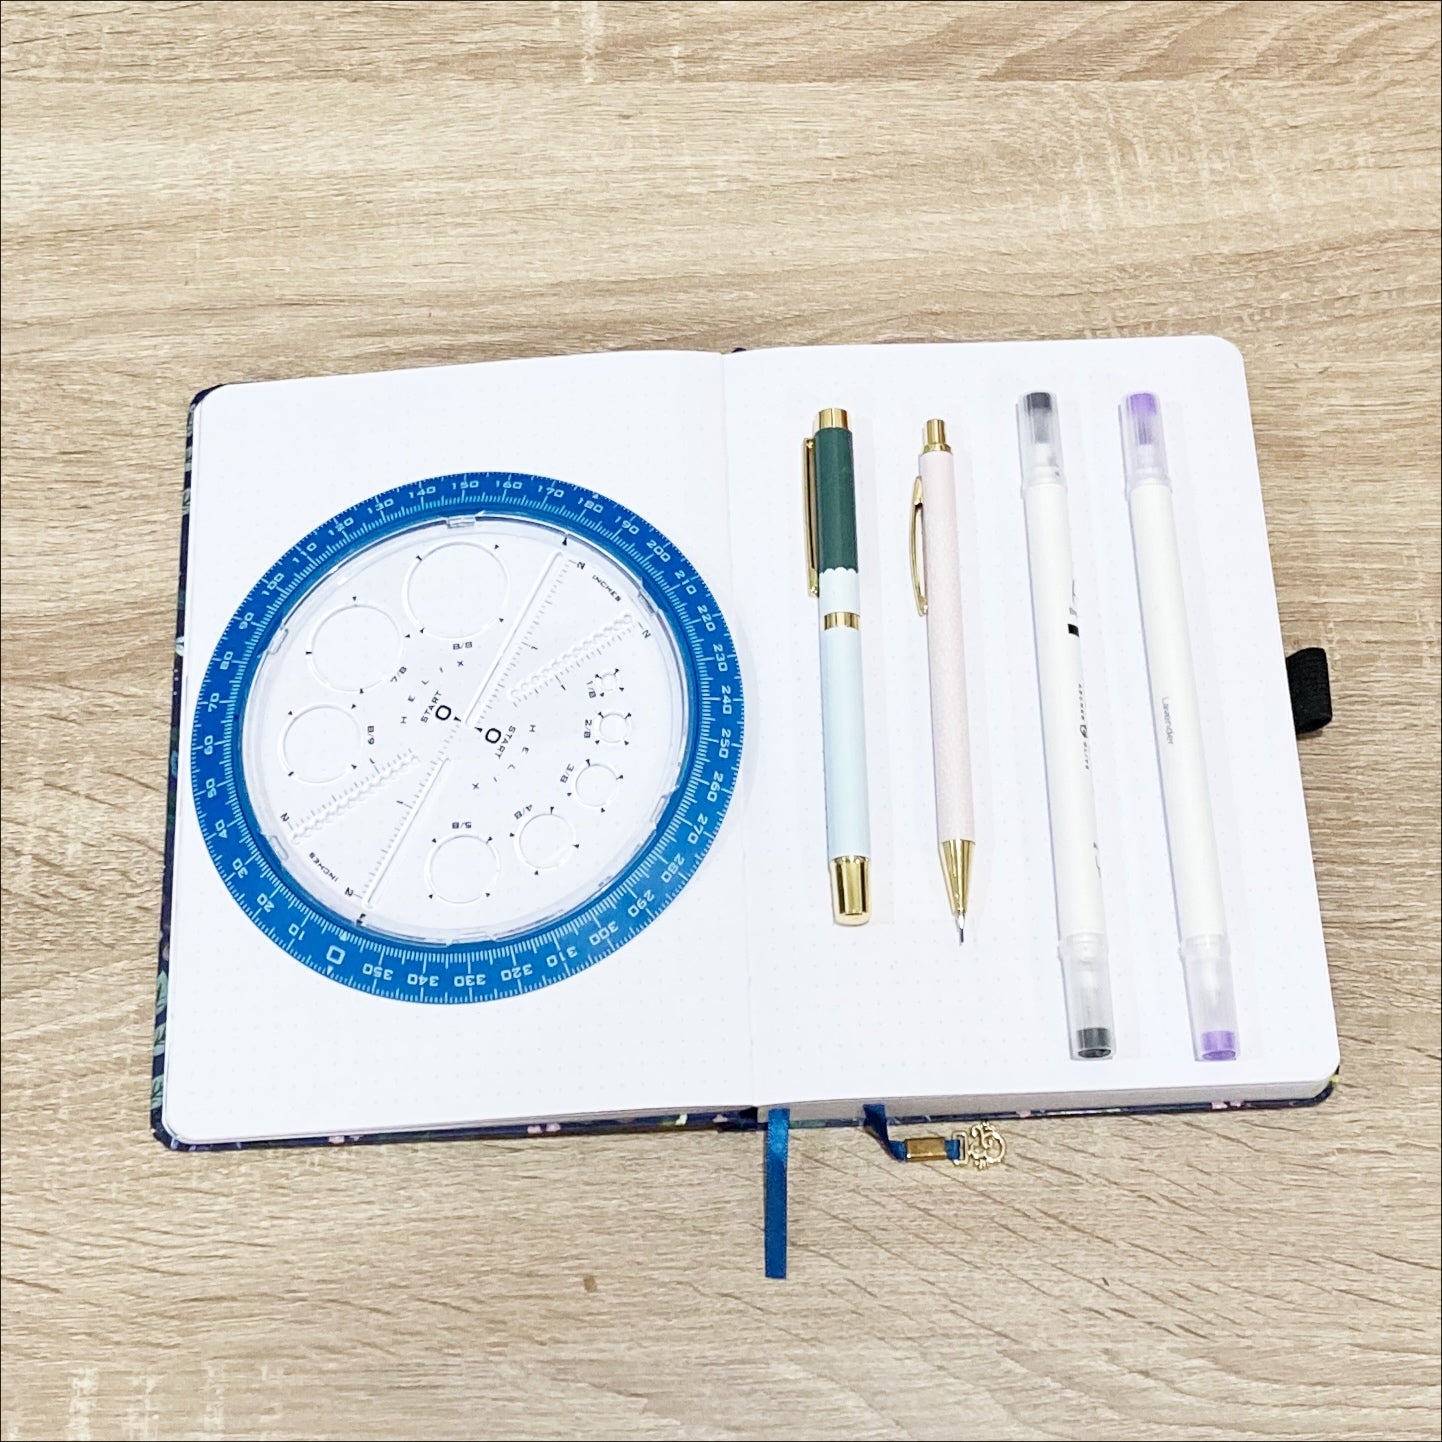 Notebook, calliographs, pen, pencil, and circle maker